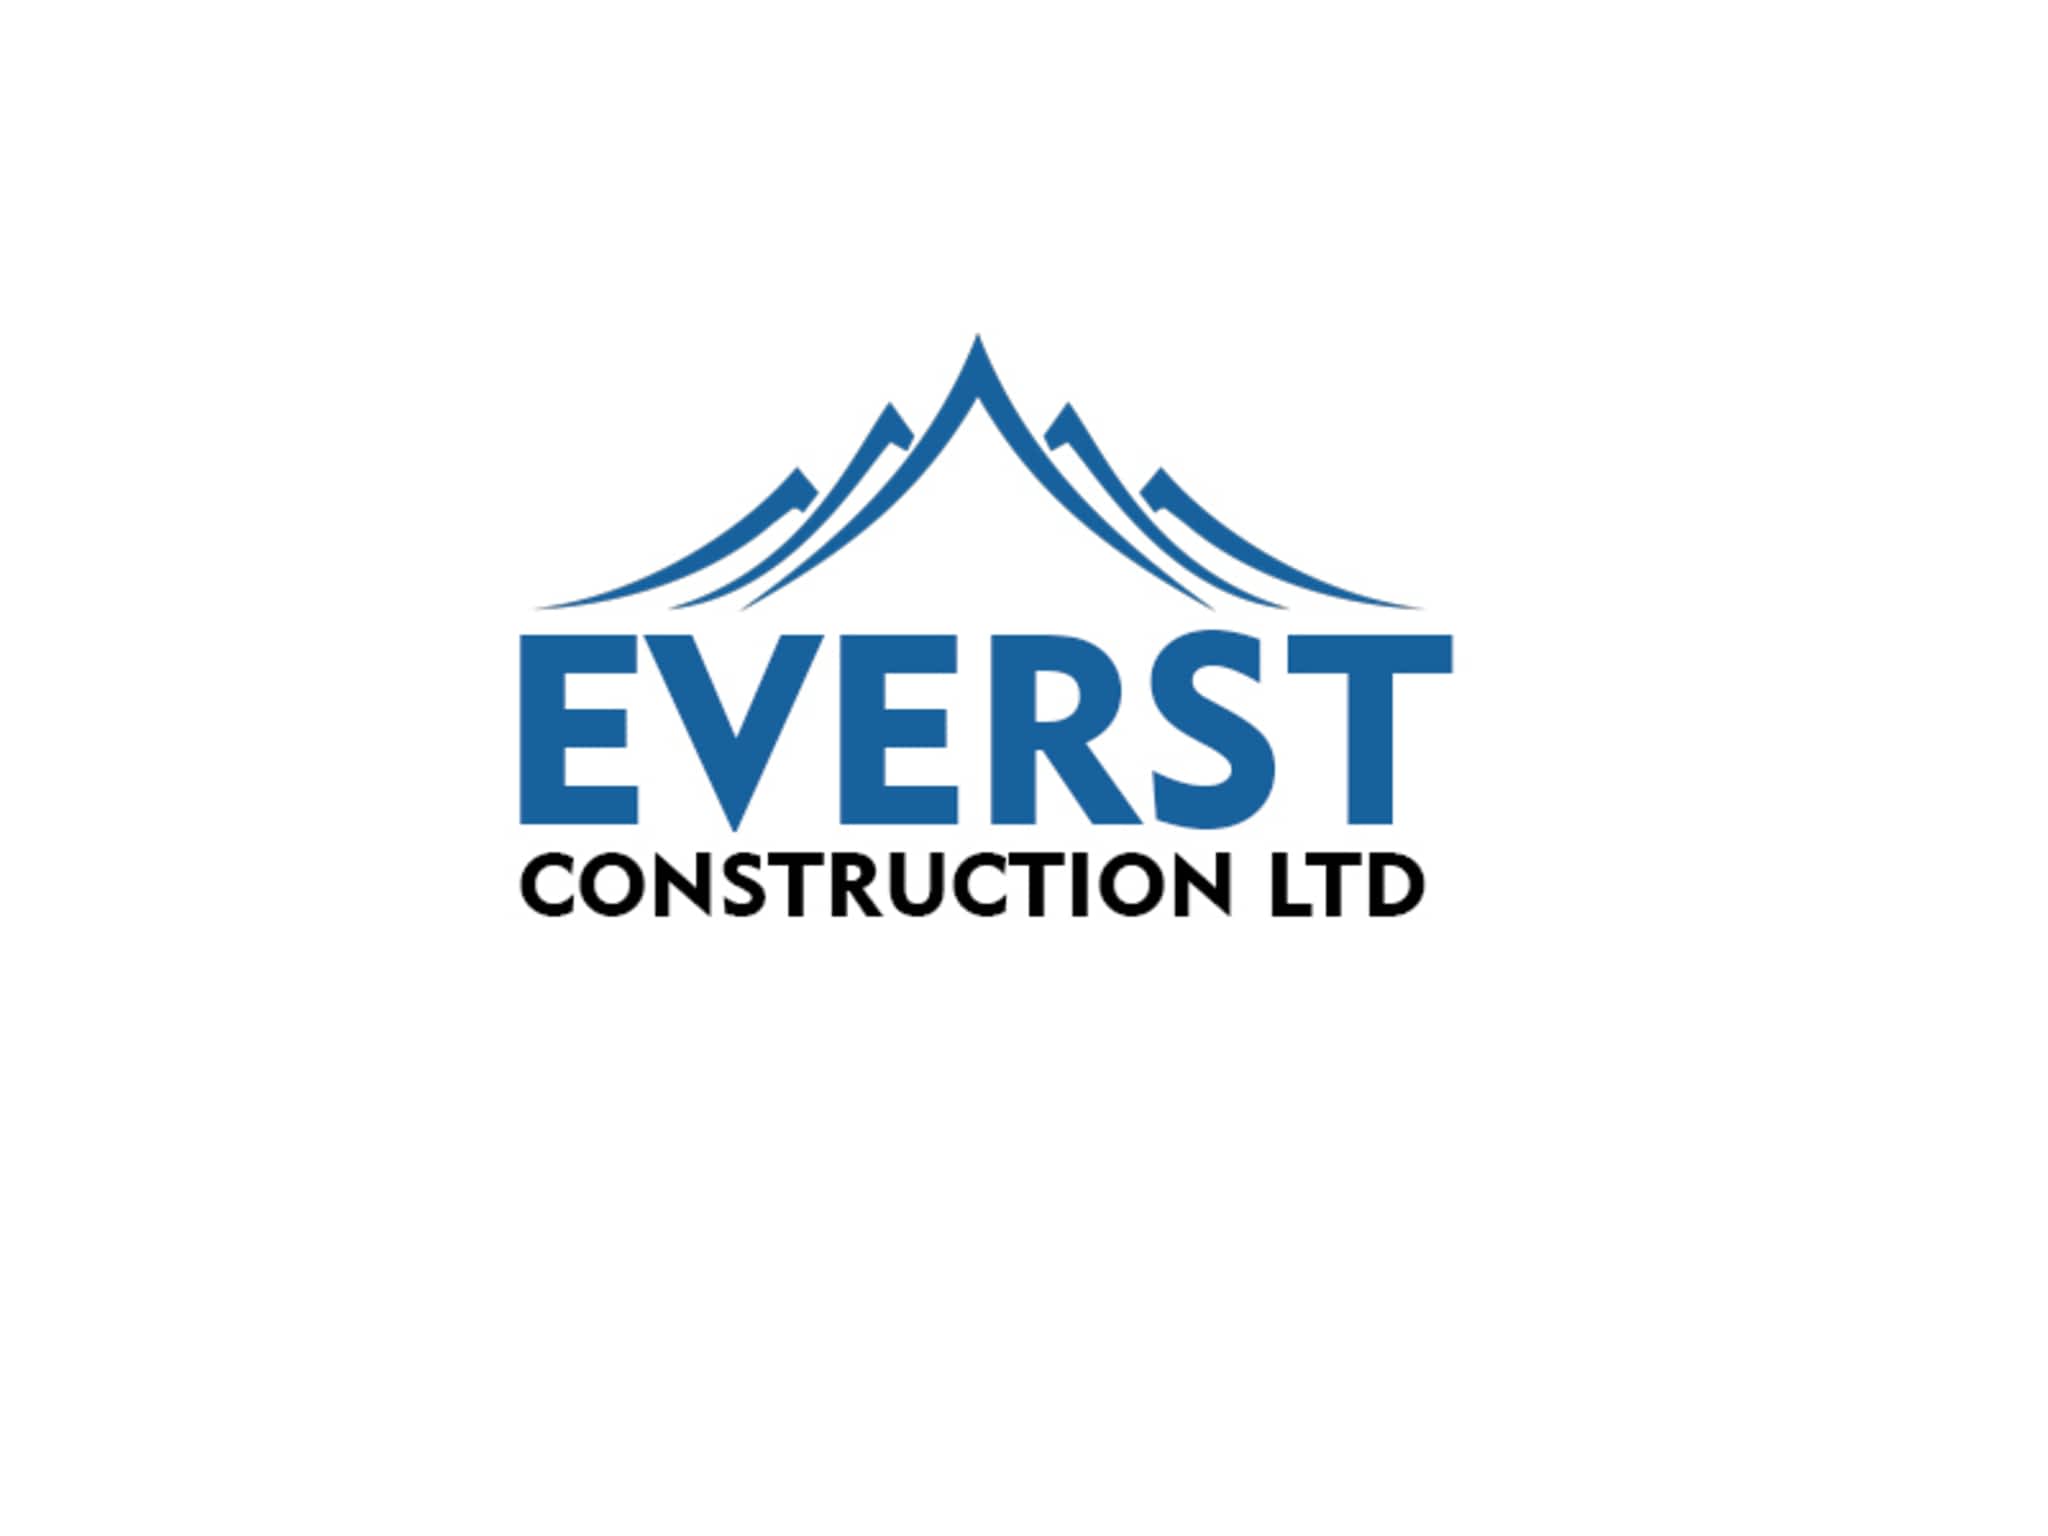 photo Everest Construction Ltd